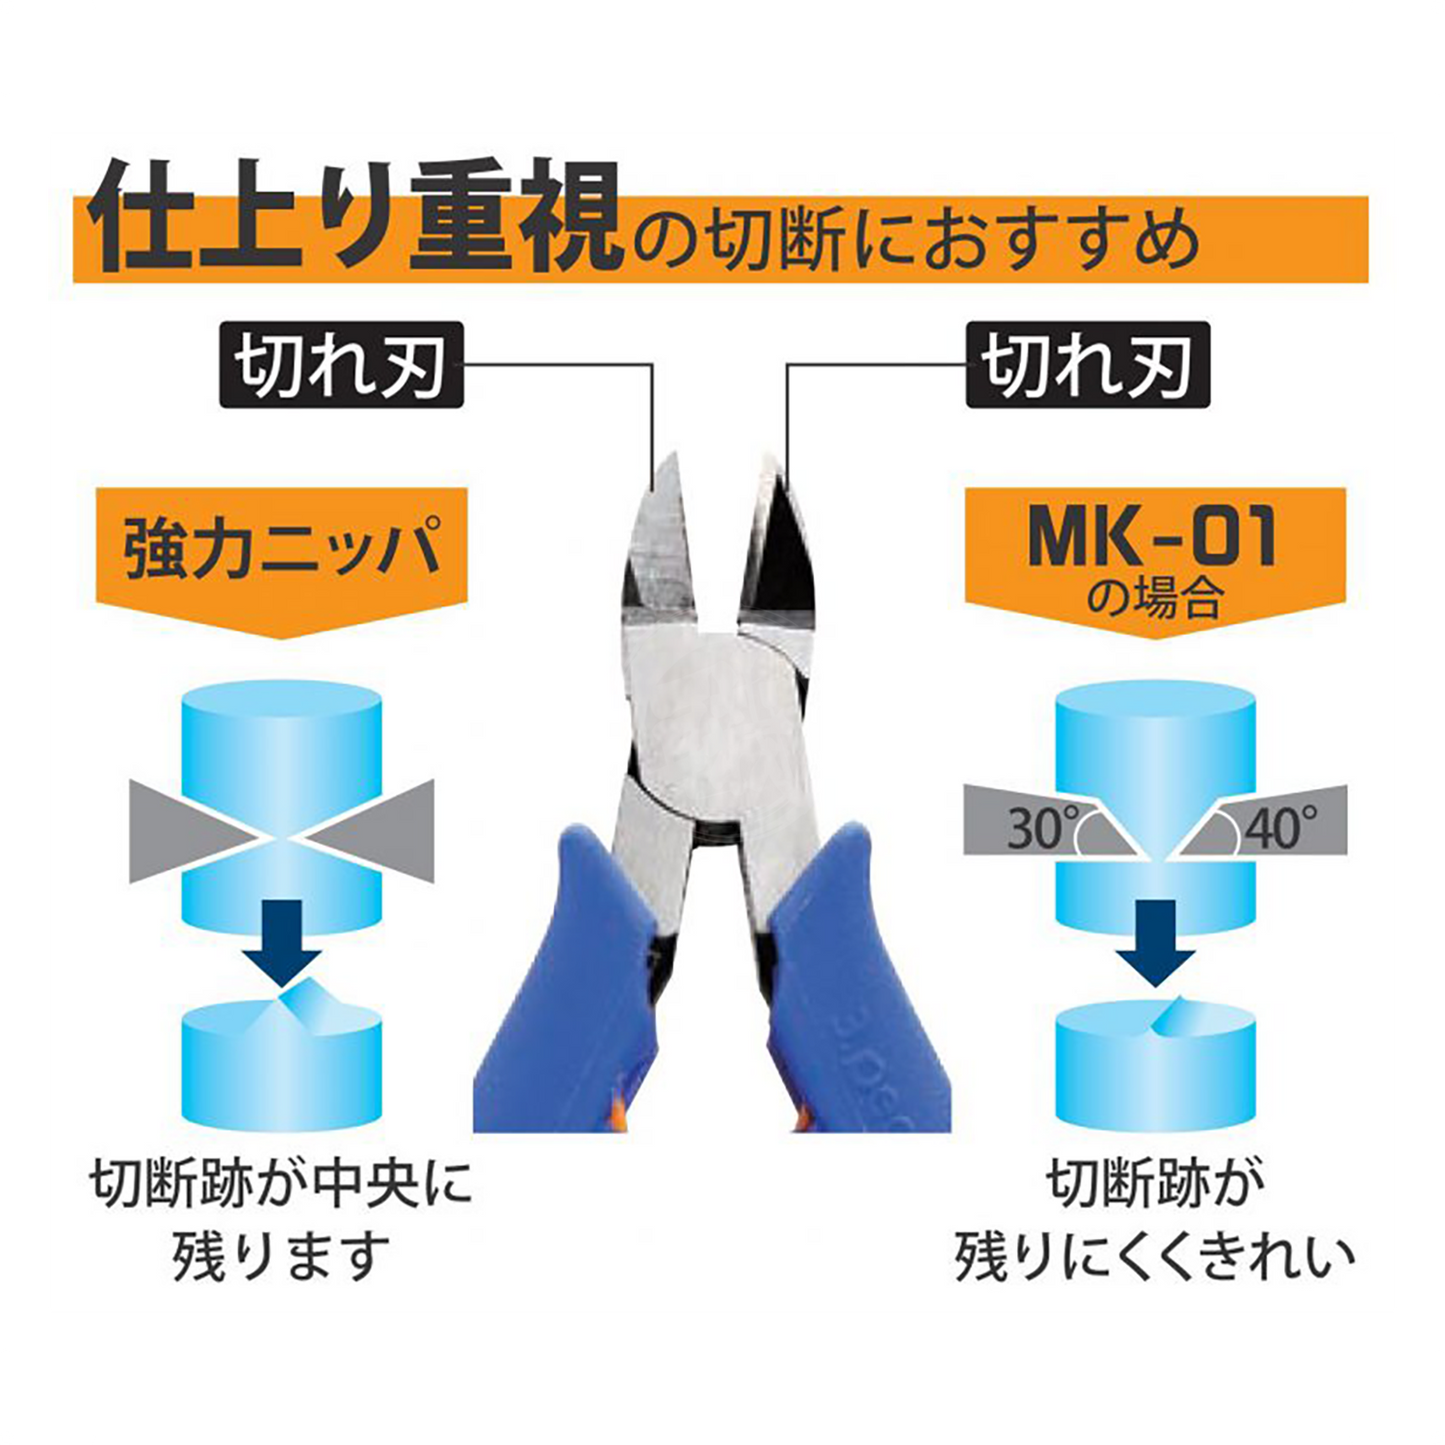 3Peaks - Model Pro Nipper MK-01 - ShokuninGunpla